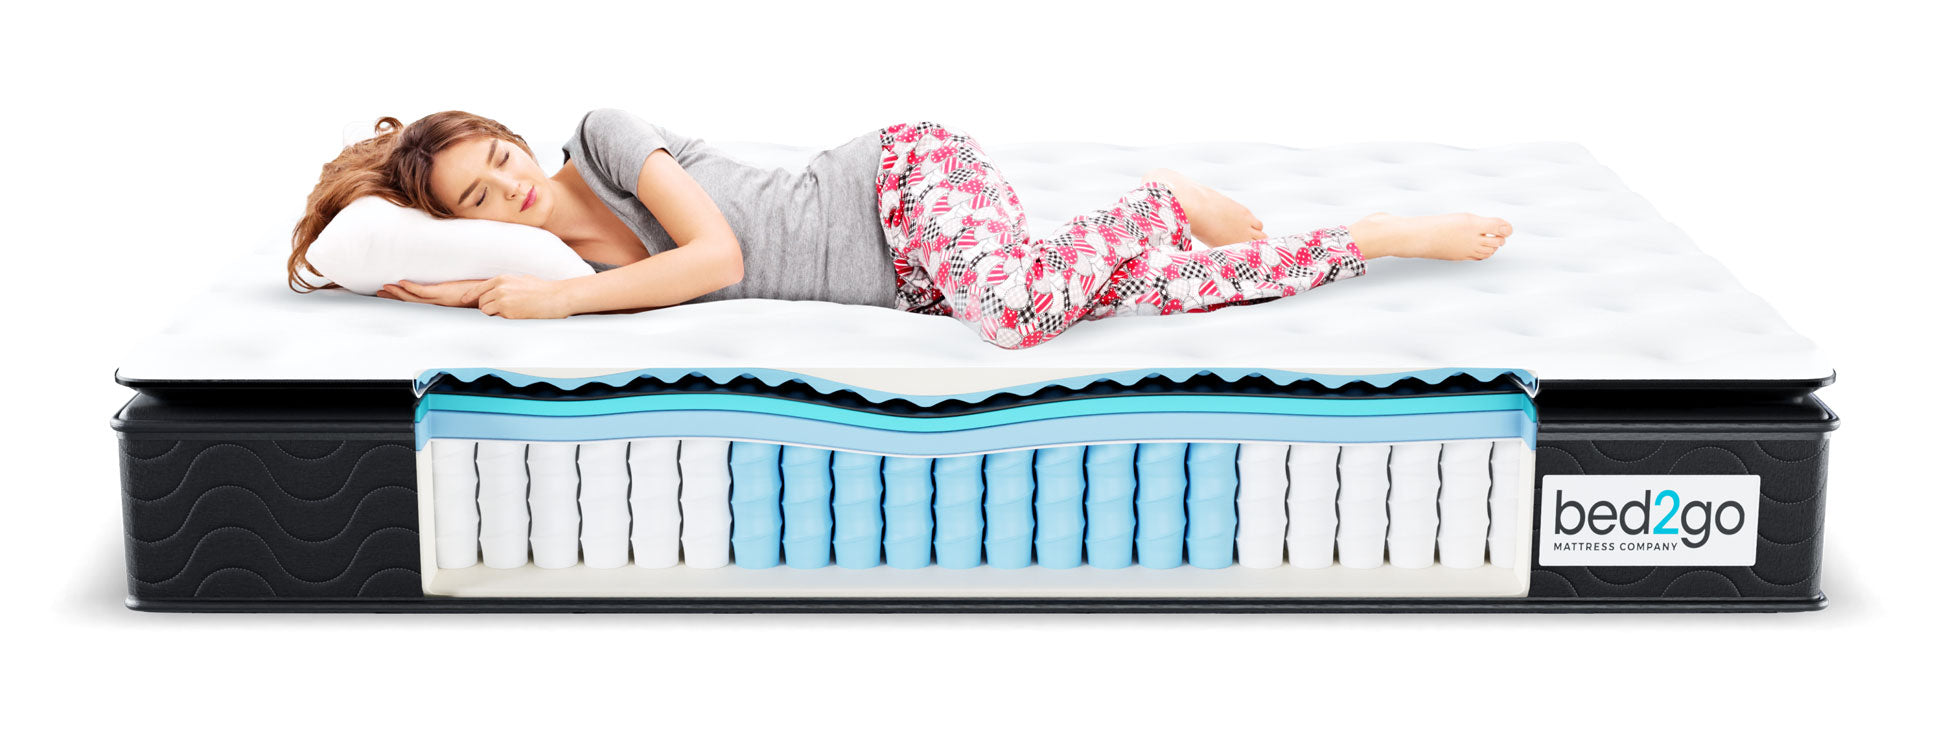 bed2go-mattress-made-in-canada-memory-foam-gel-pocket-coils-hybrid-mattress-twin-xl-full-queen-king-free-shipping-canada-woman-side